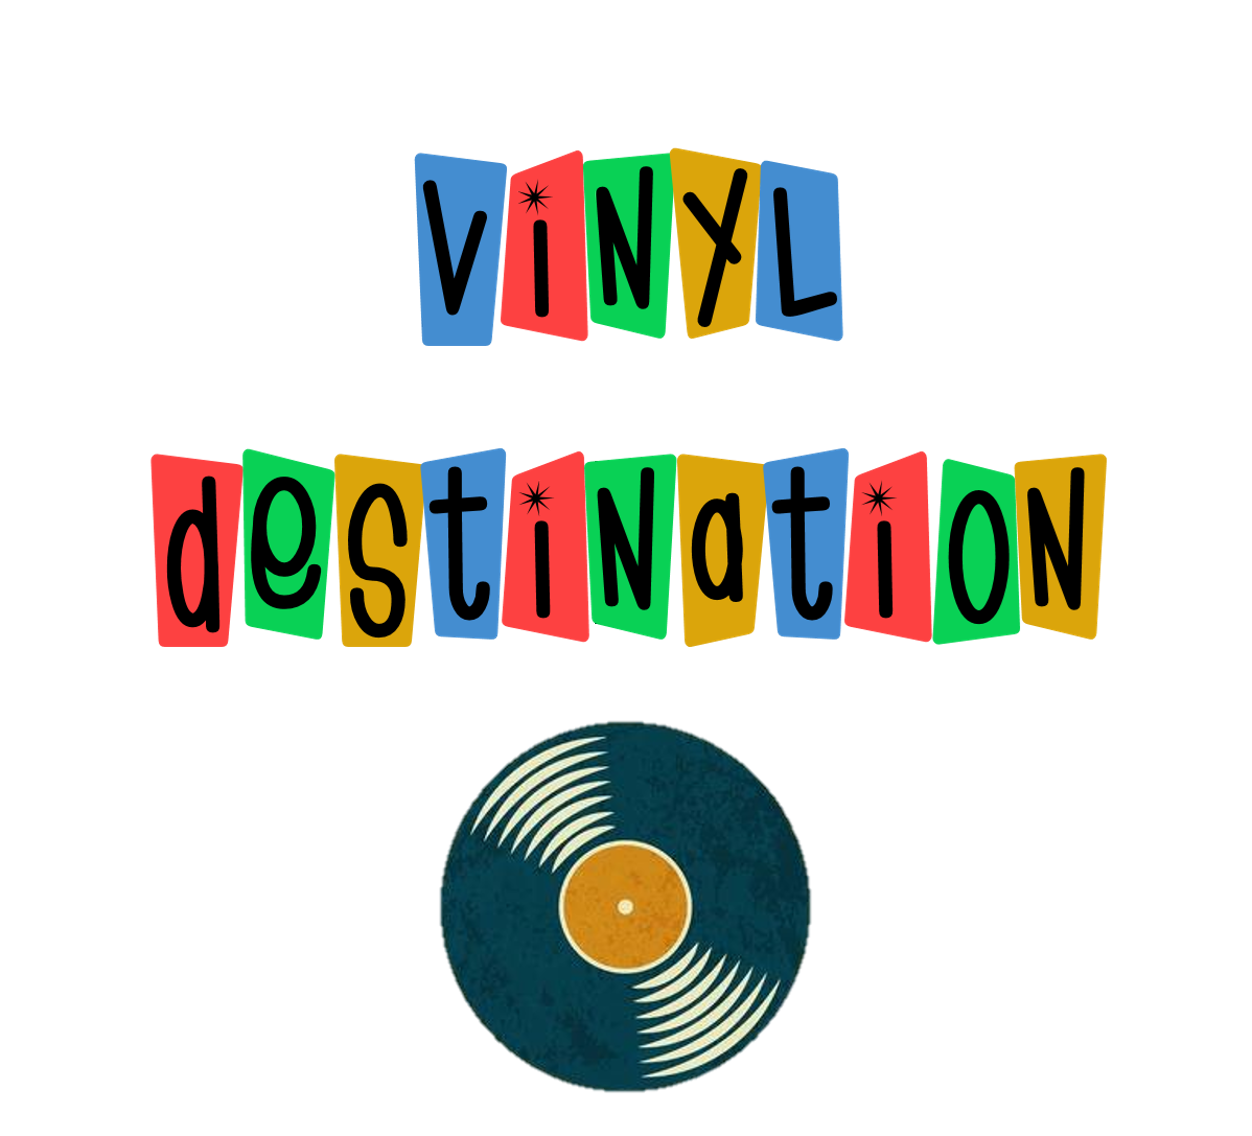 Vinyl Destination logo